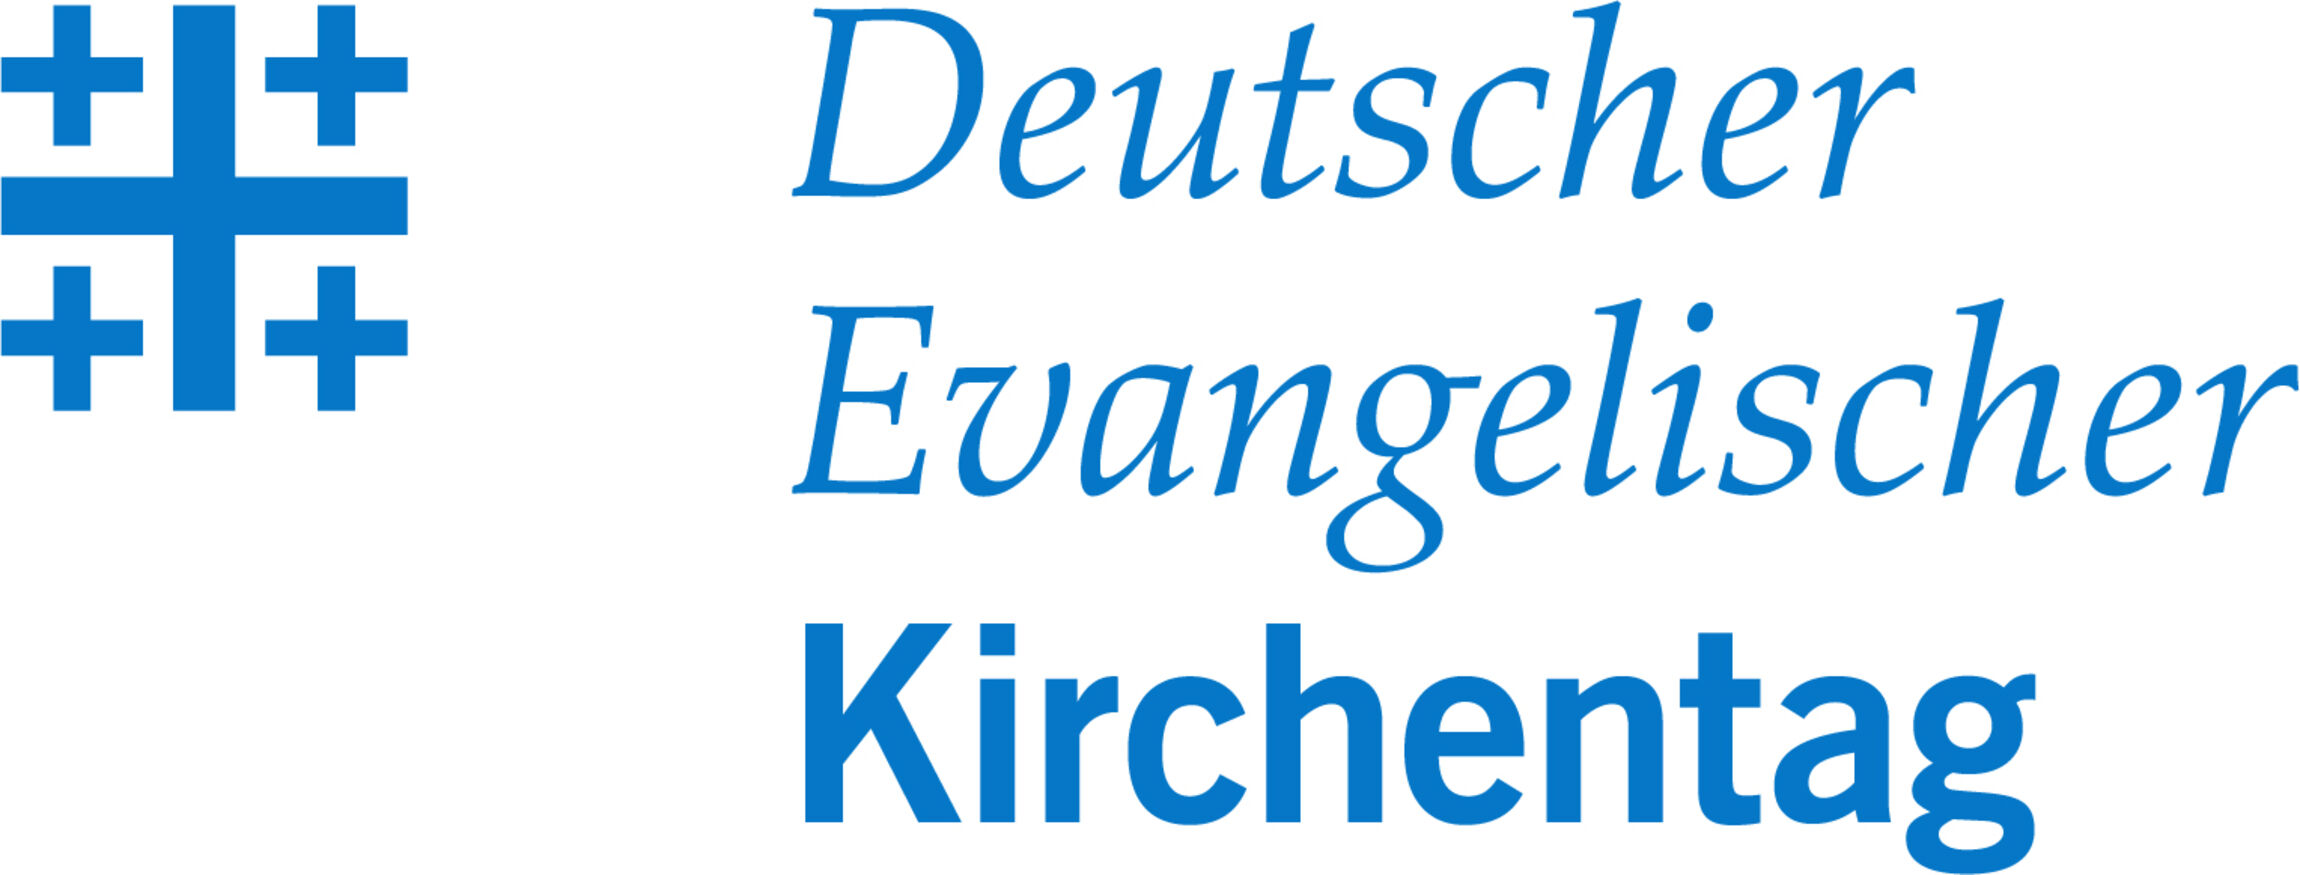 Ev. Kirchentag 2015 in Stuttgart